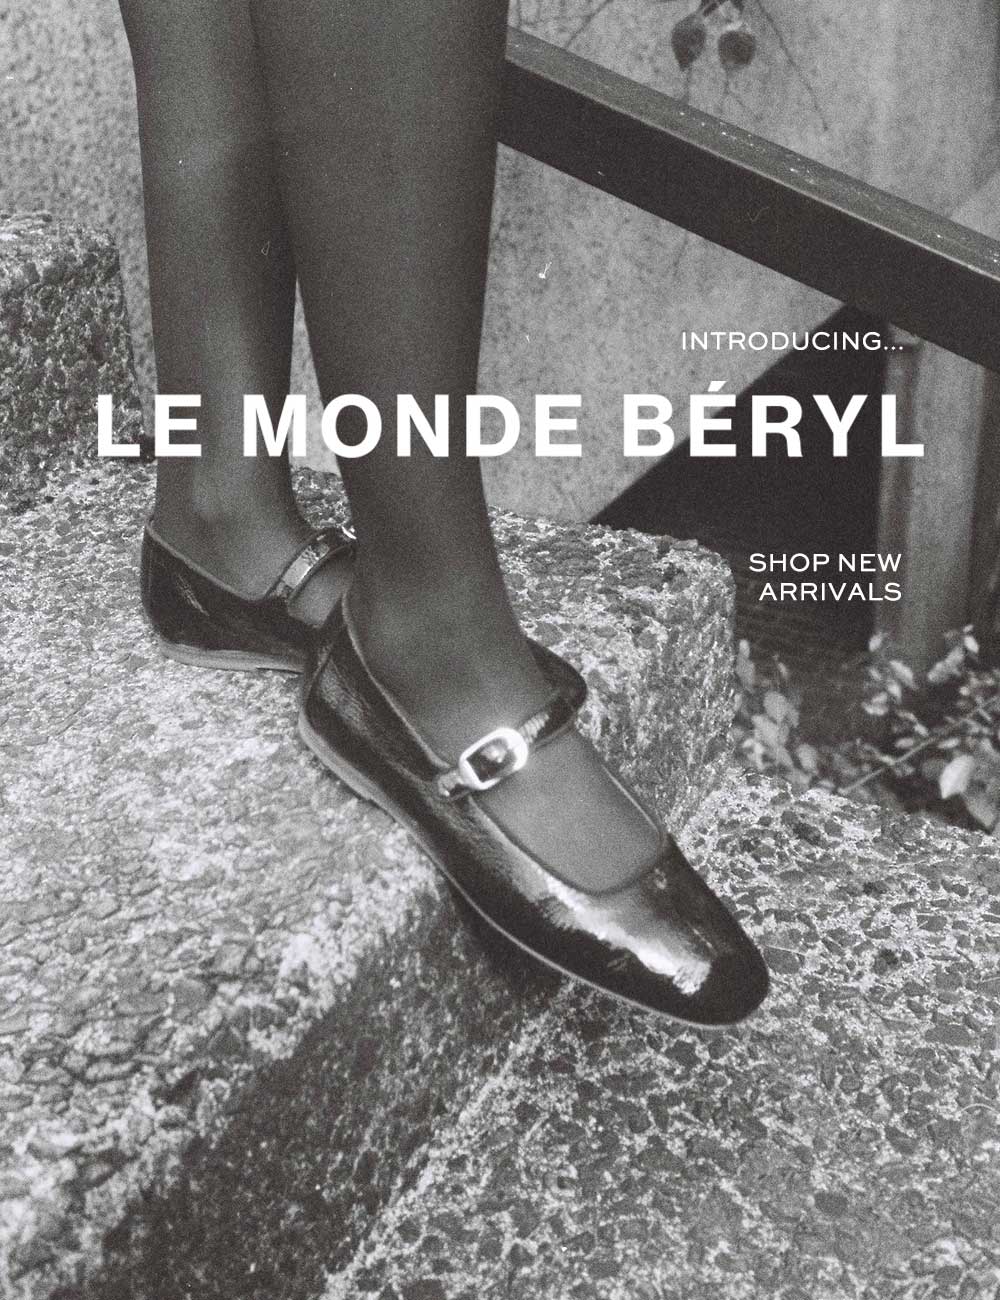 Introducing...Le Monde Beryl